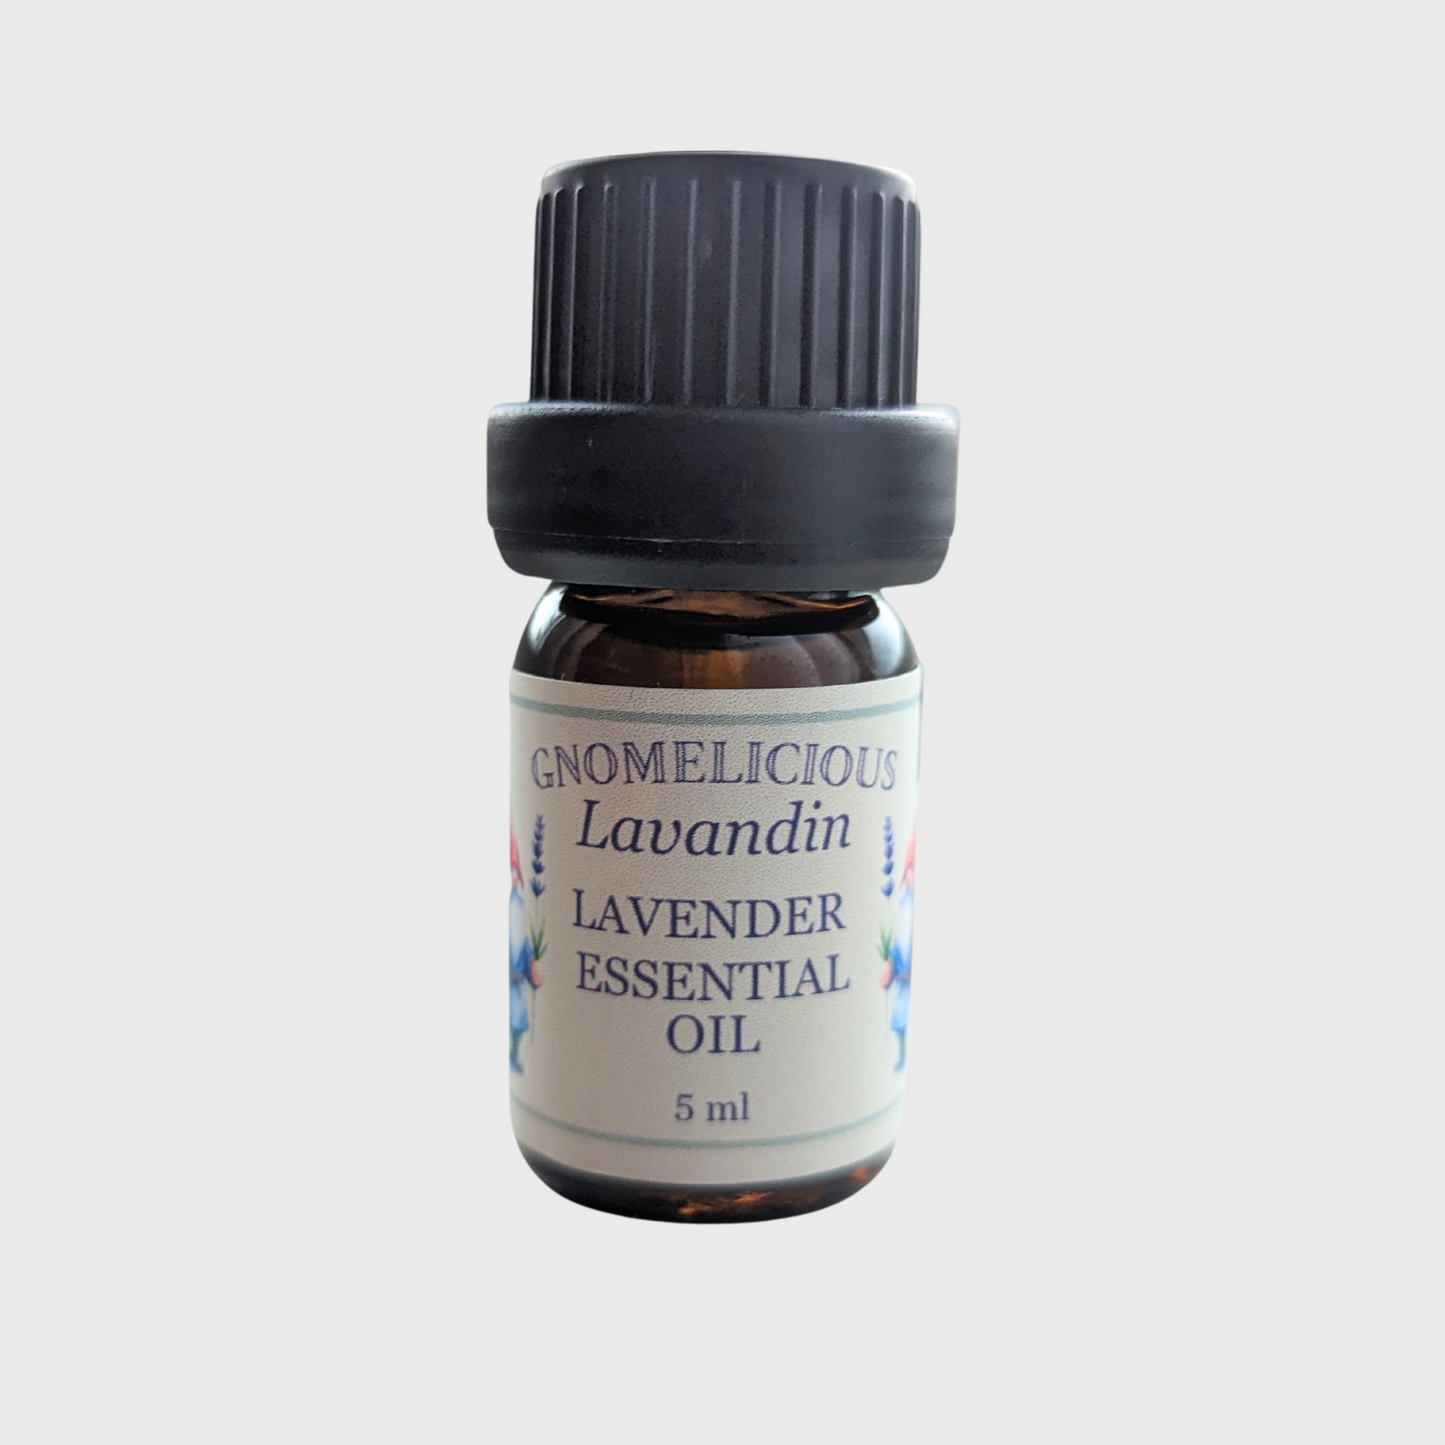 Lavender Essential Oil (Intermedia) - Lavandin, Grosso & Super Varieties (5ml)